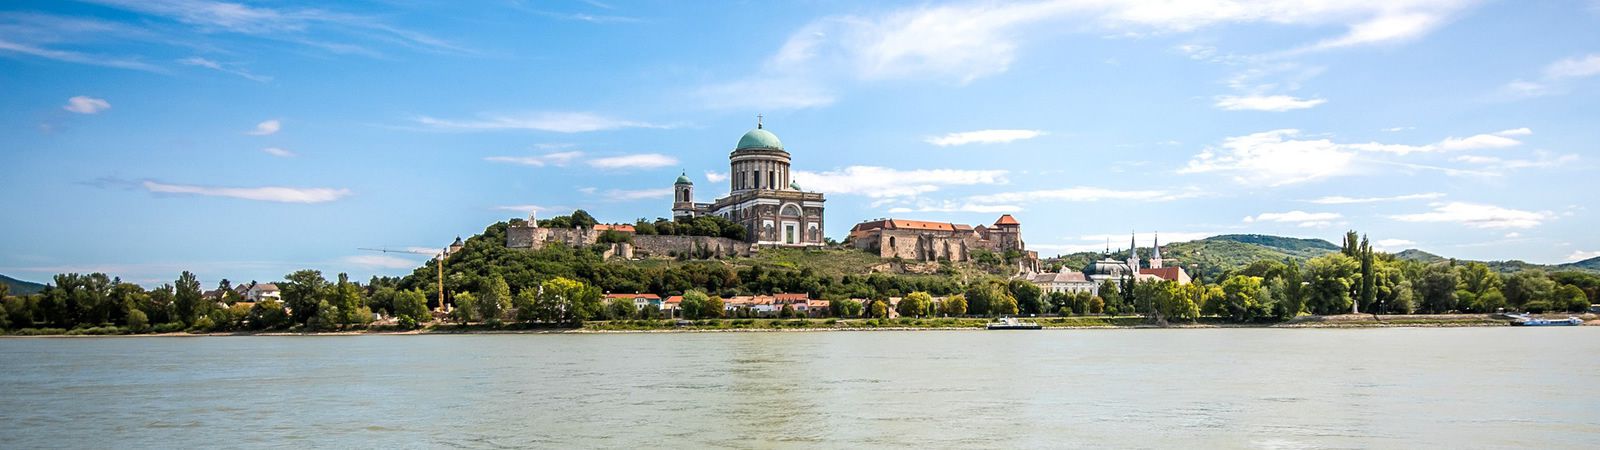 Donau oever